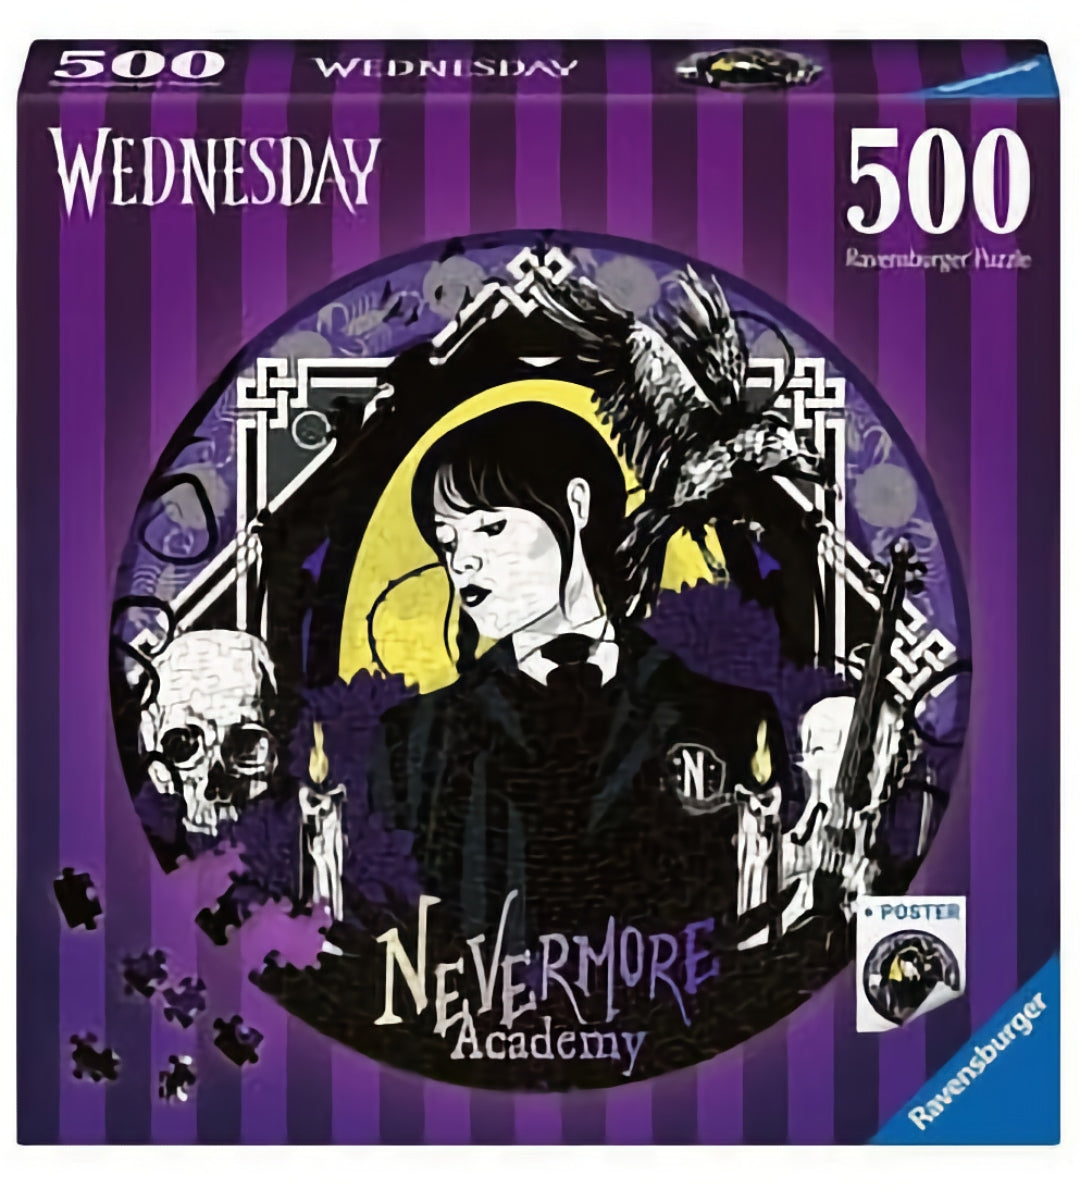 Ravensburger - Wednesday Nevermore Academy - Ronde Puzzle (500 Stukjes)